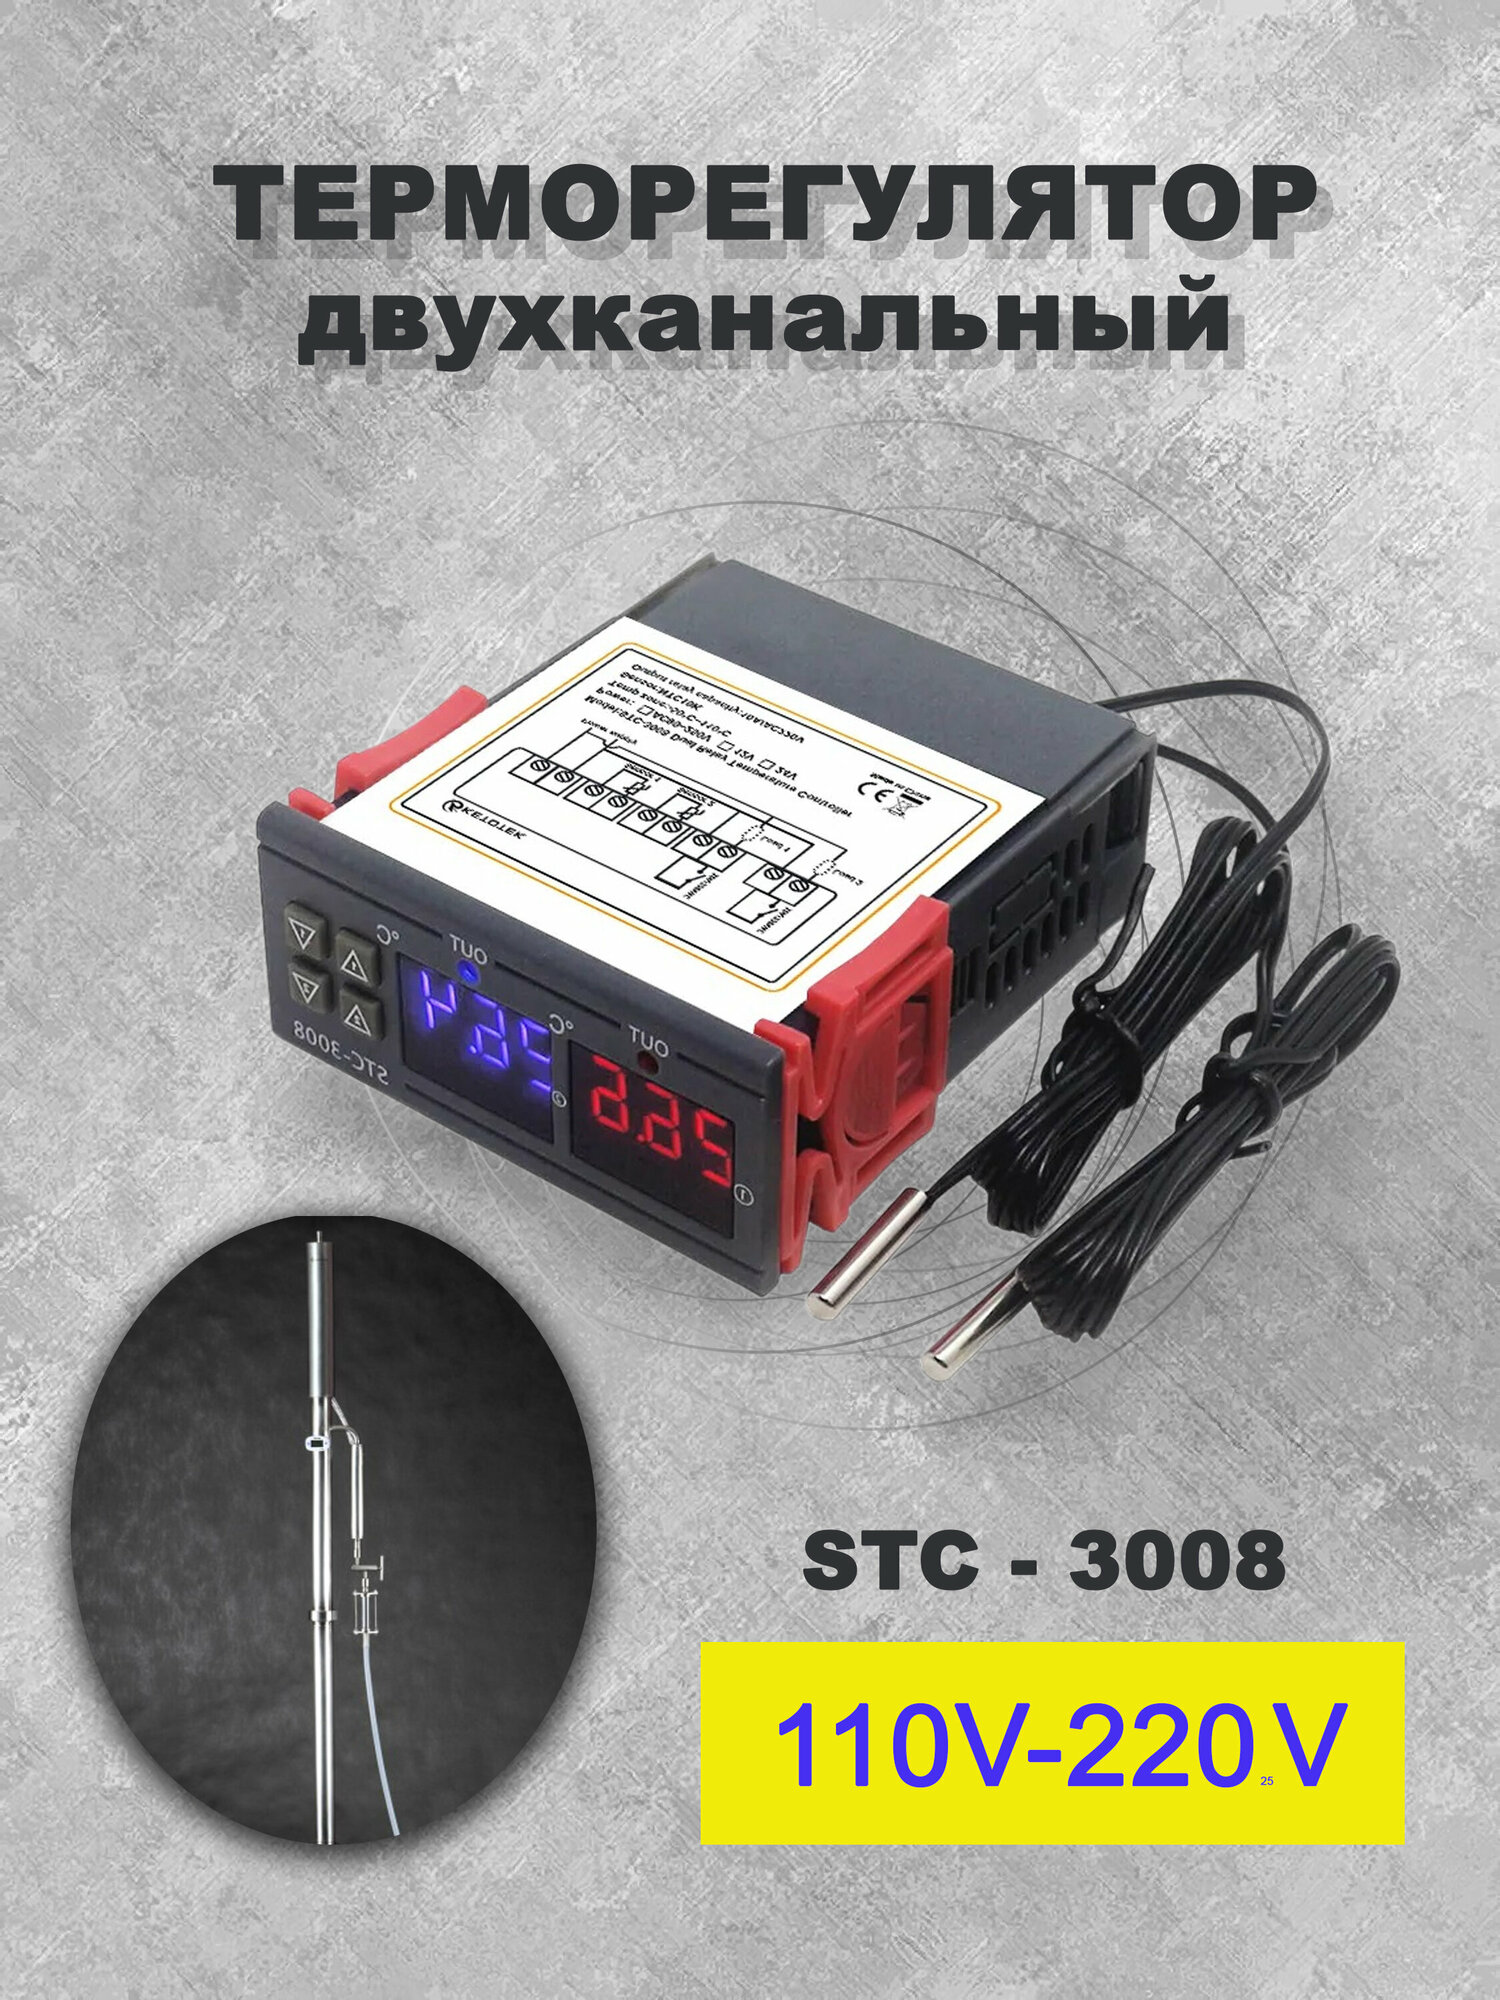 Терморегулятор STC-3008 цифровой двухканальный контроллер регулятор температуры 220 Вольт